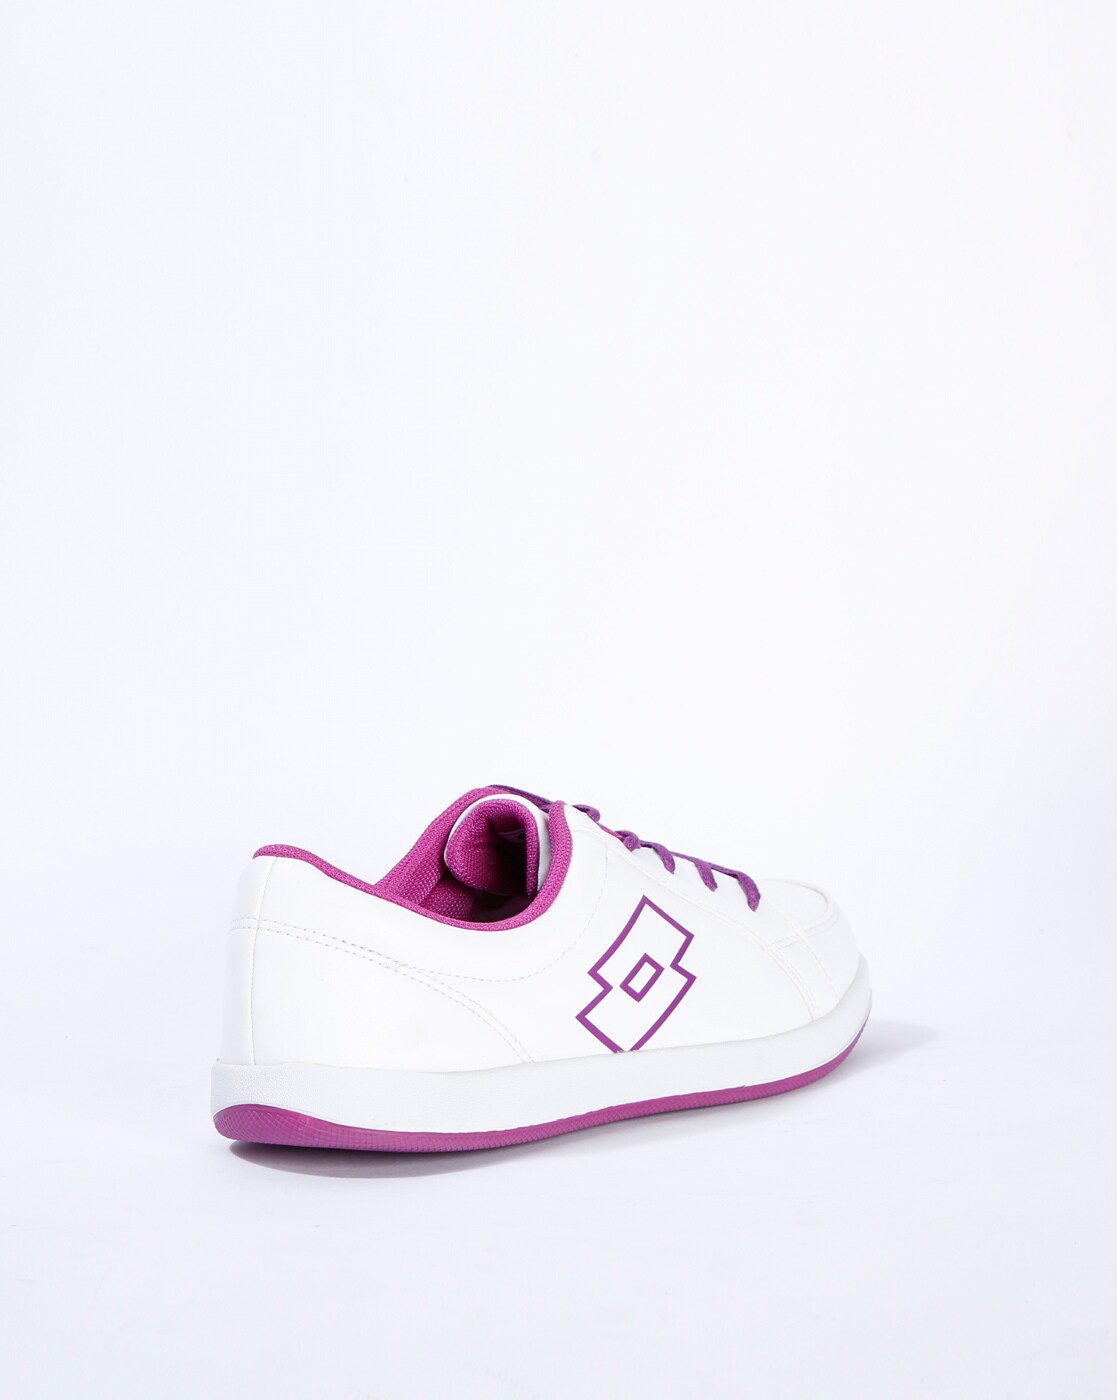 Lotto Leggenda Sneakers In White | ModeSens | Sneakers men, Sneakers white,  Sneakers